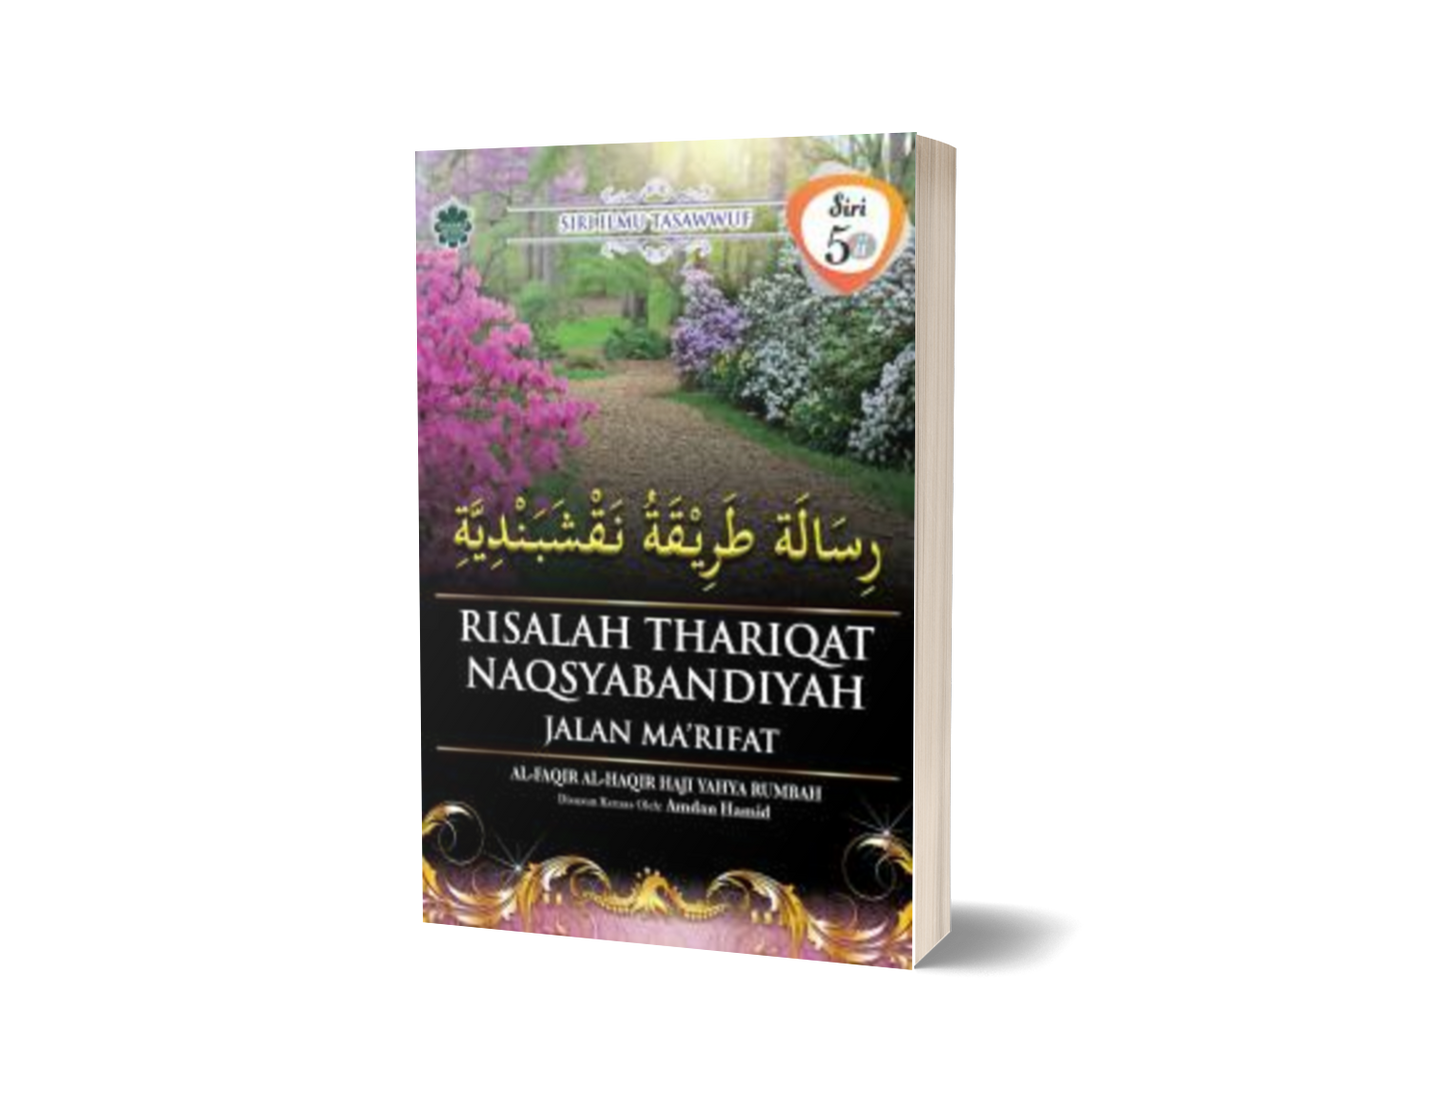 Risalah Thariqat Naqsyabandiyah - Jalan Ma'rifat (Siri 5 (ii))